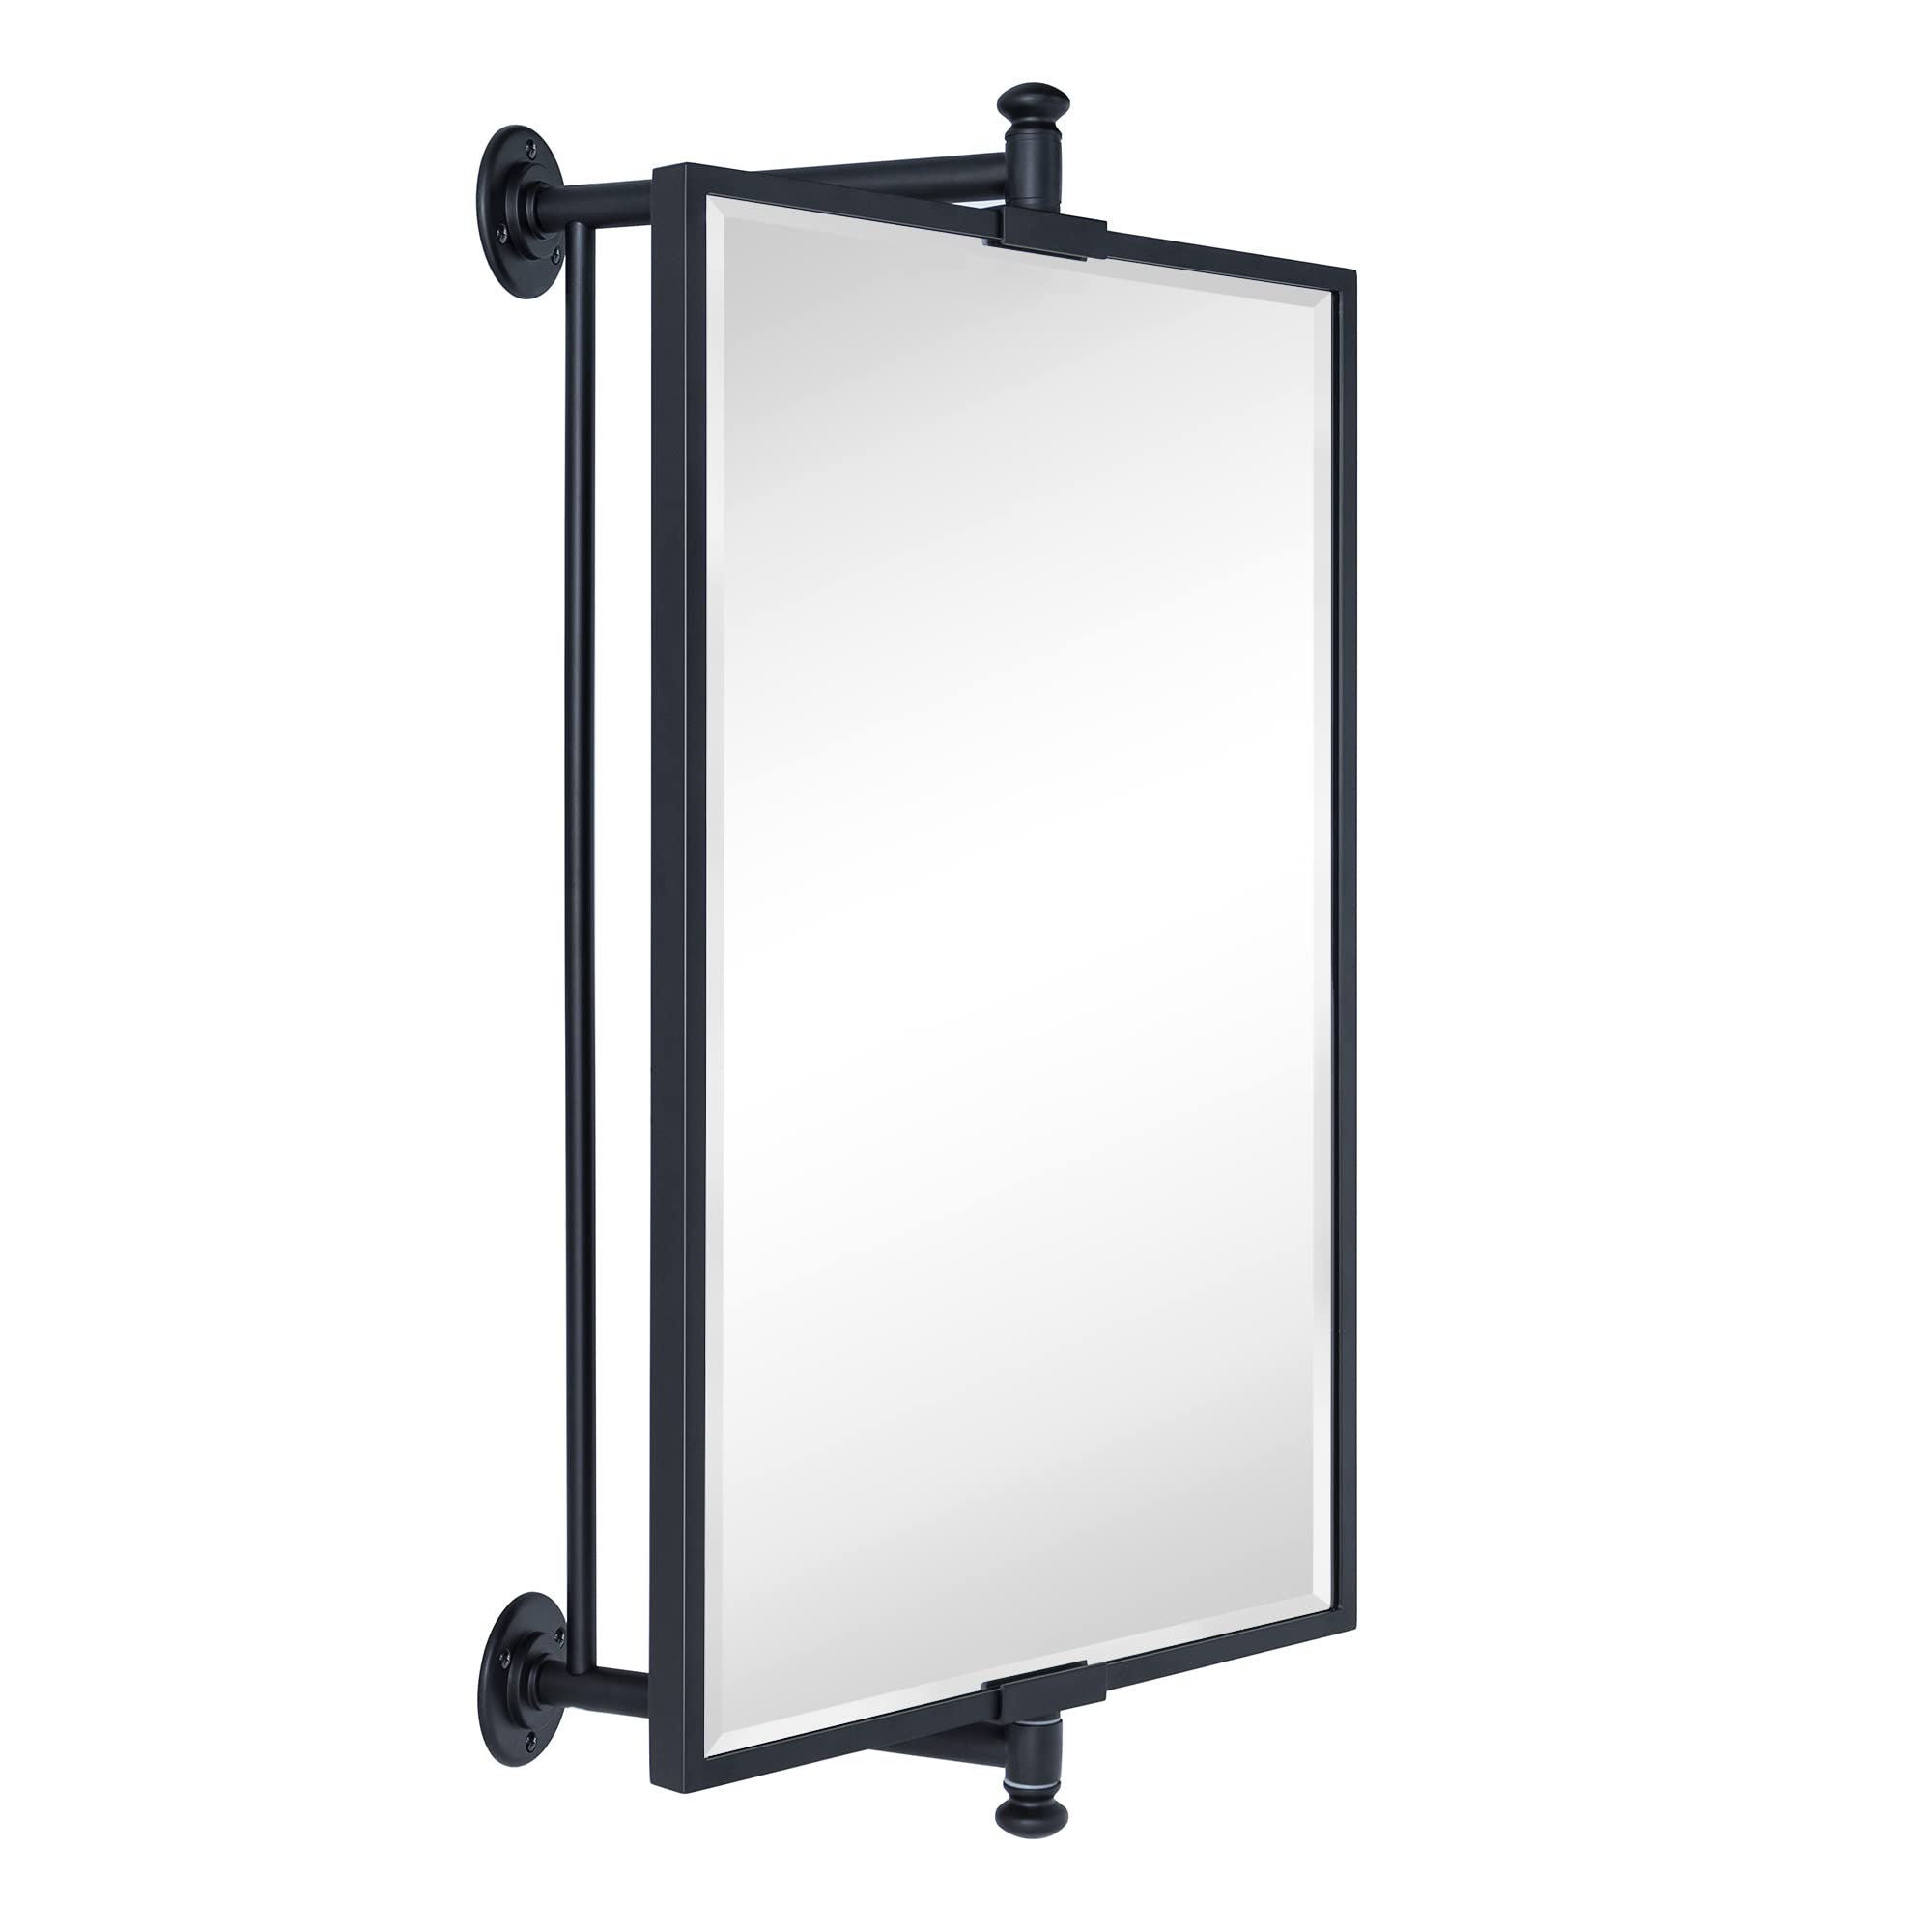 Corrente Pivot-N-View Squared Cornered Rectangle Mirror for Window Bathroom Vanity-14x22-Black